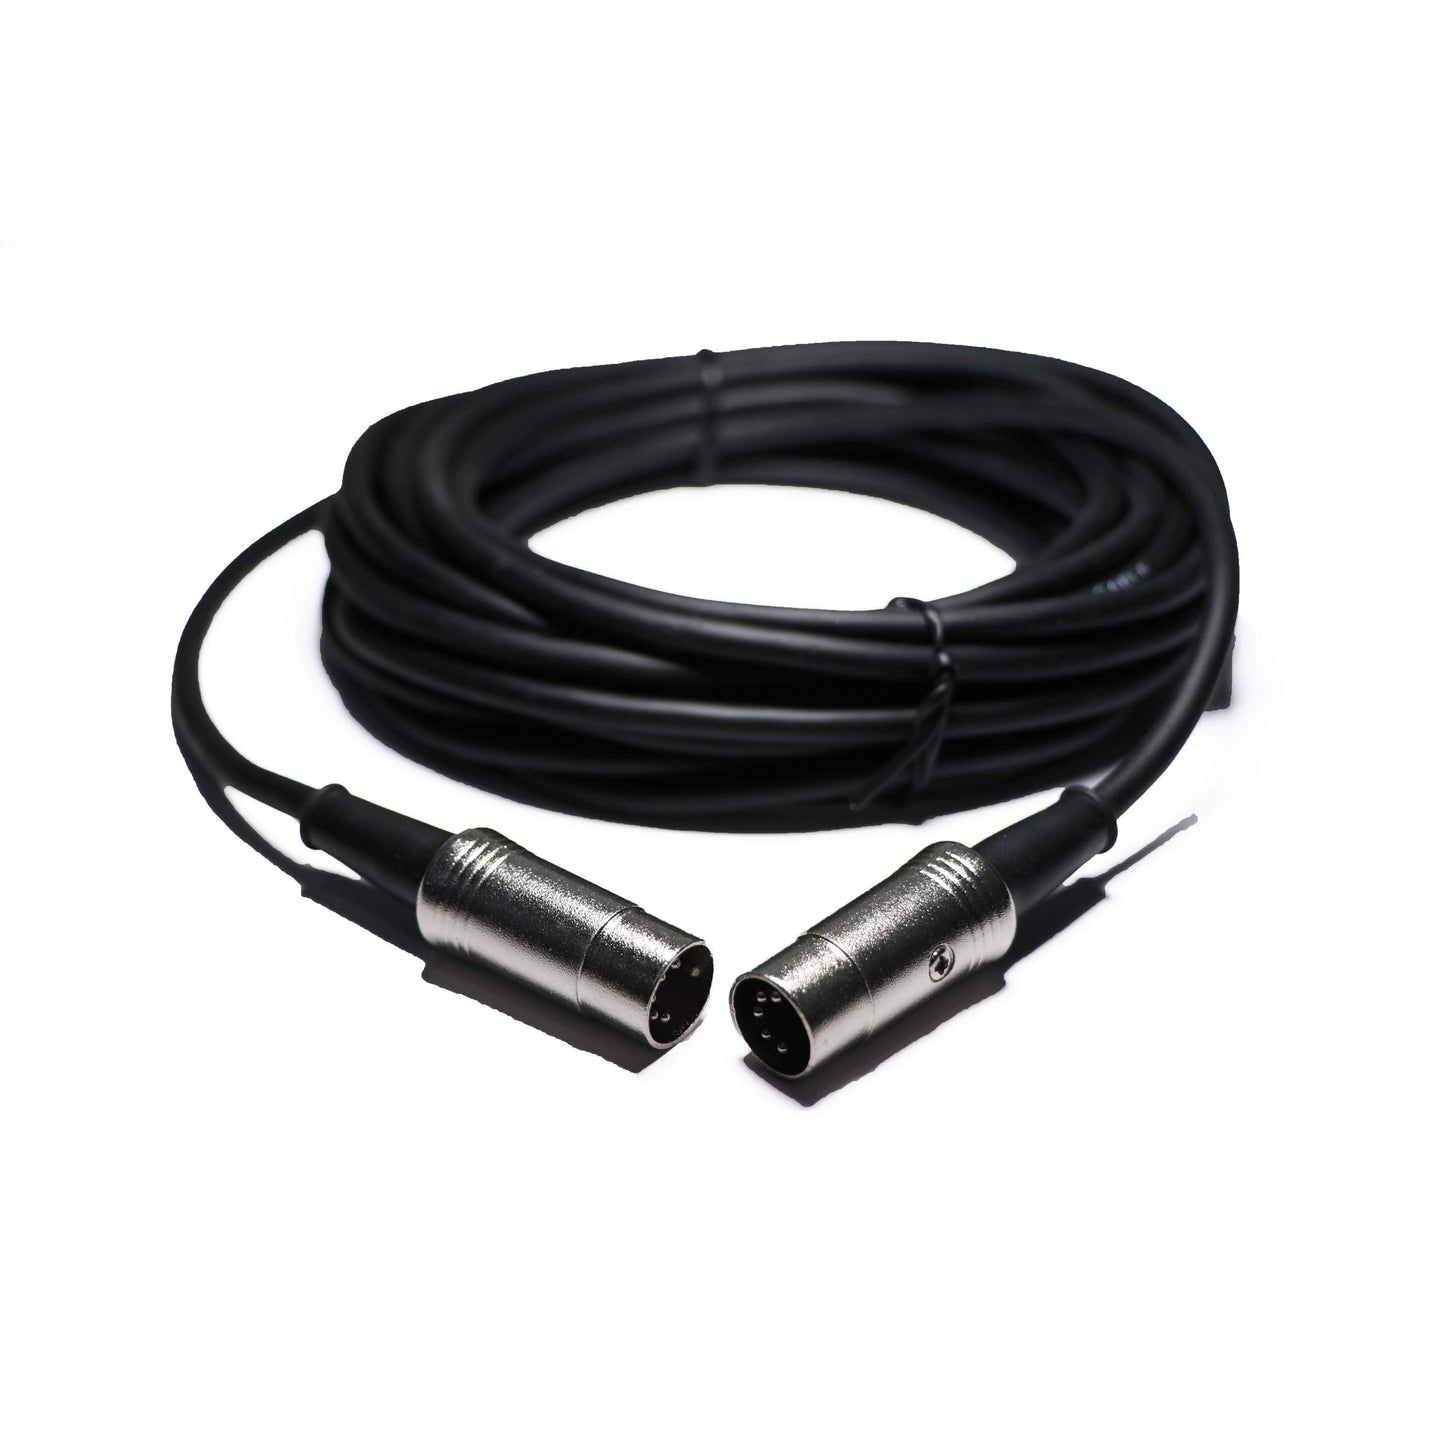 Tovaste Cable SDM-20 2 Male XLR